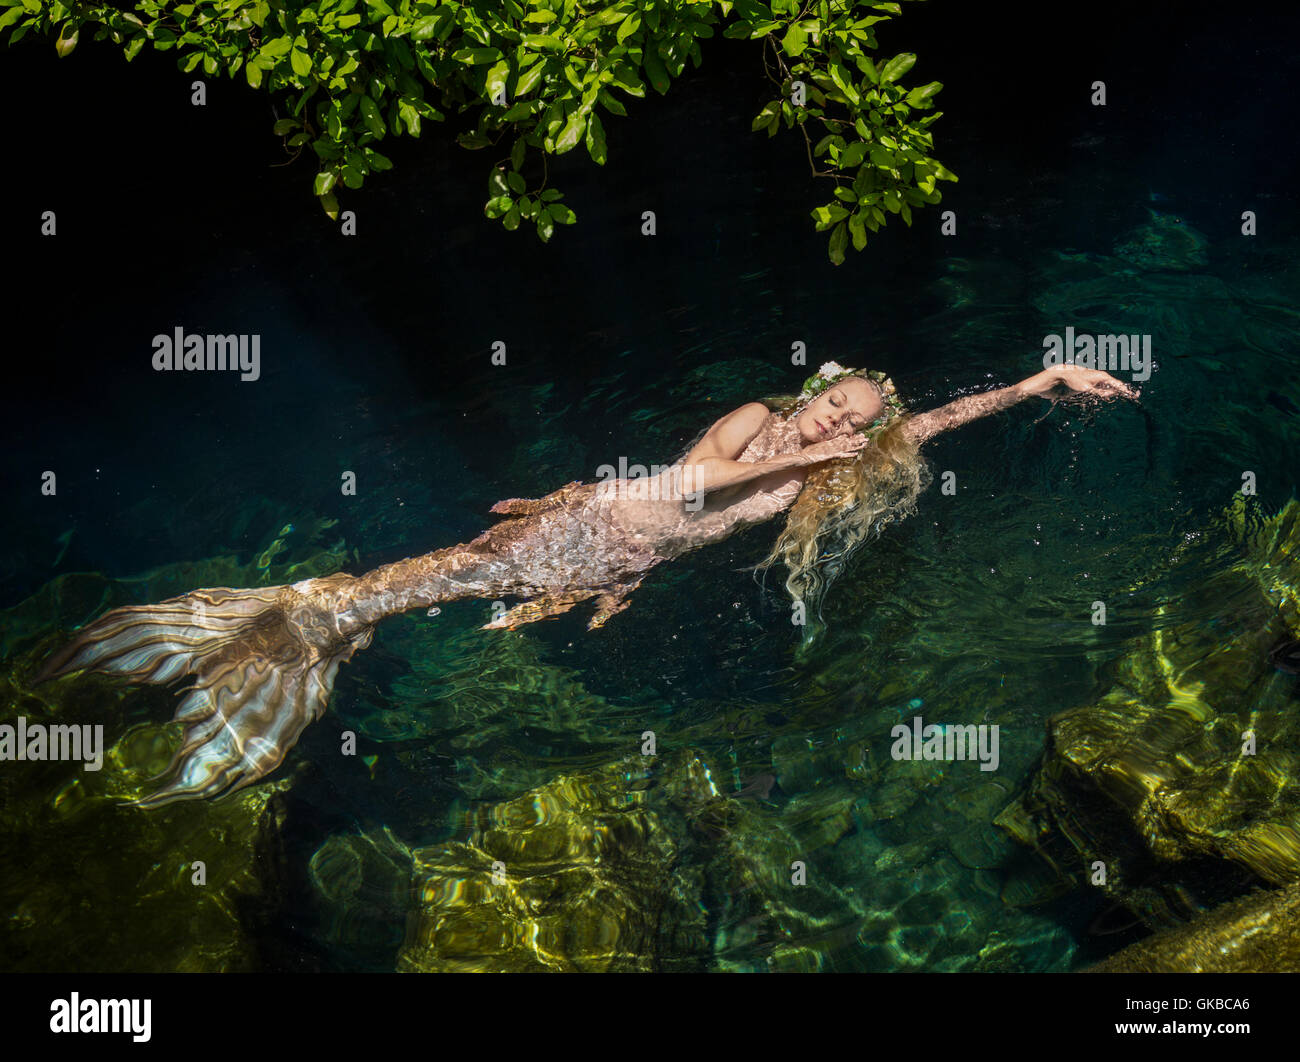 Sleeping mermaid floating on the waters surface Stock Photo